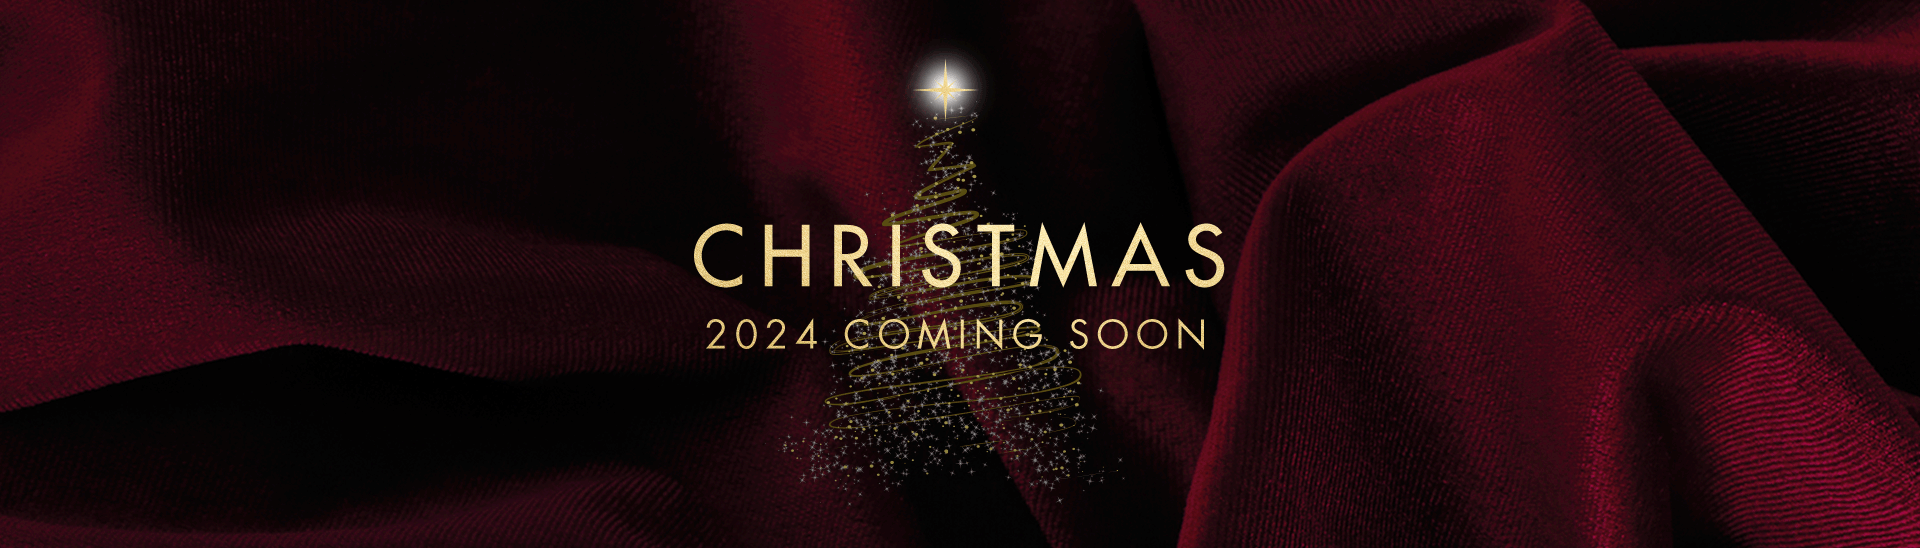 Christmas 2024 at Manchester